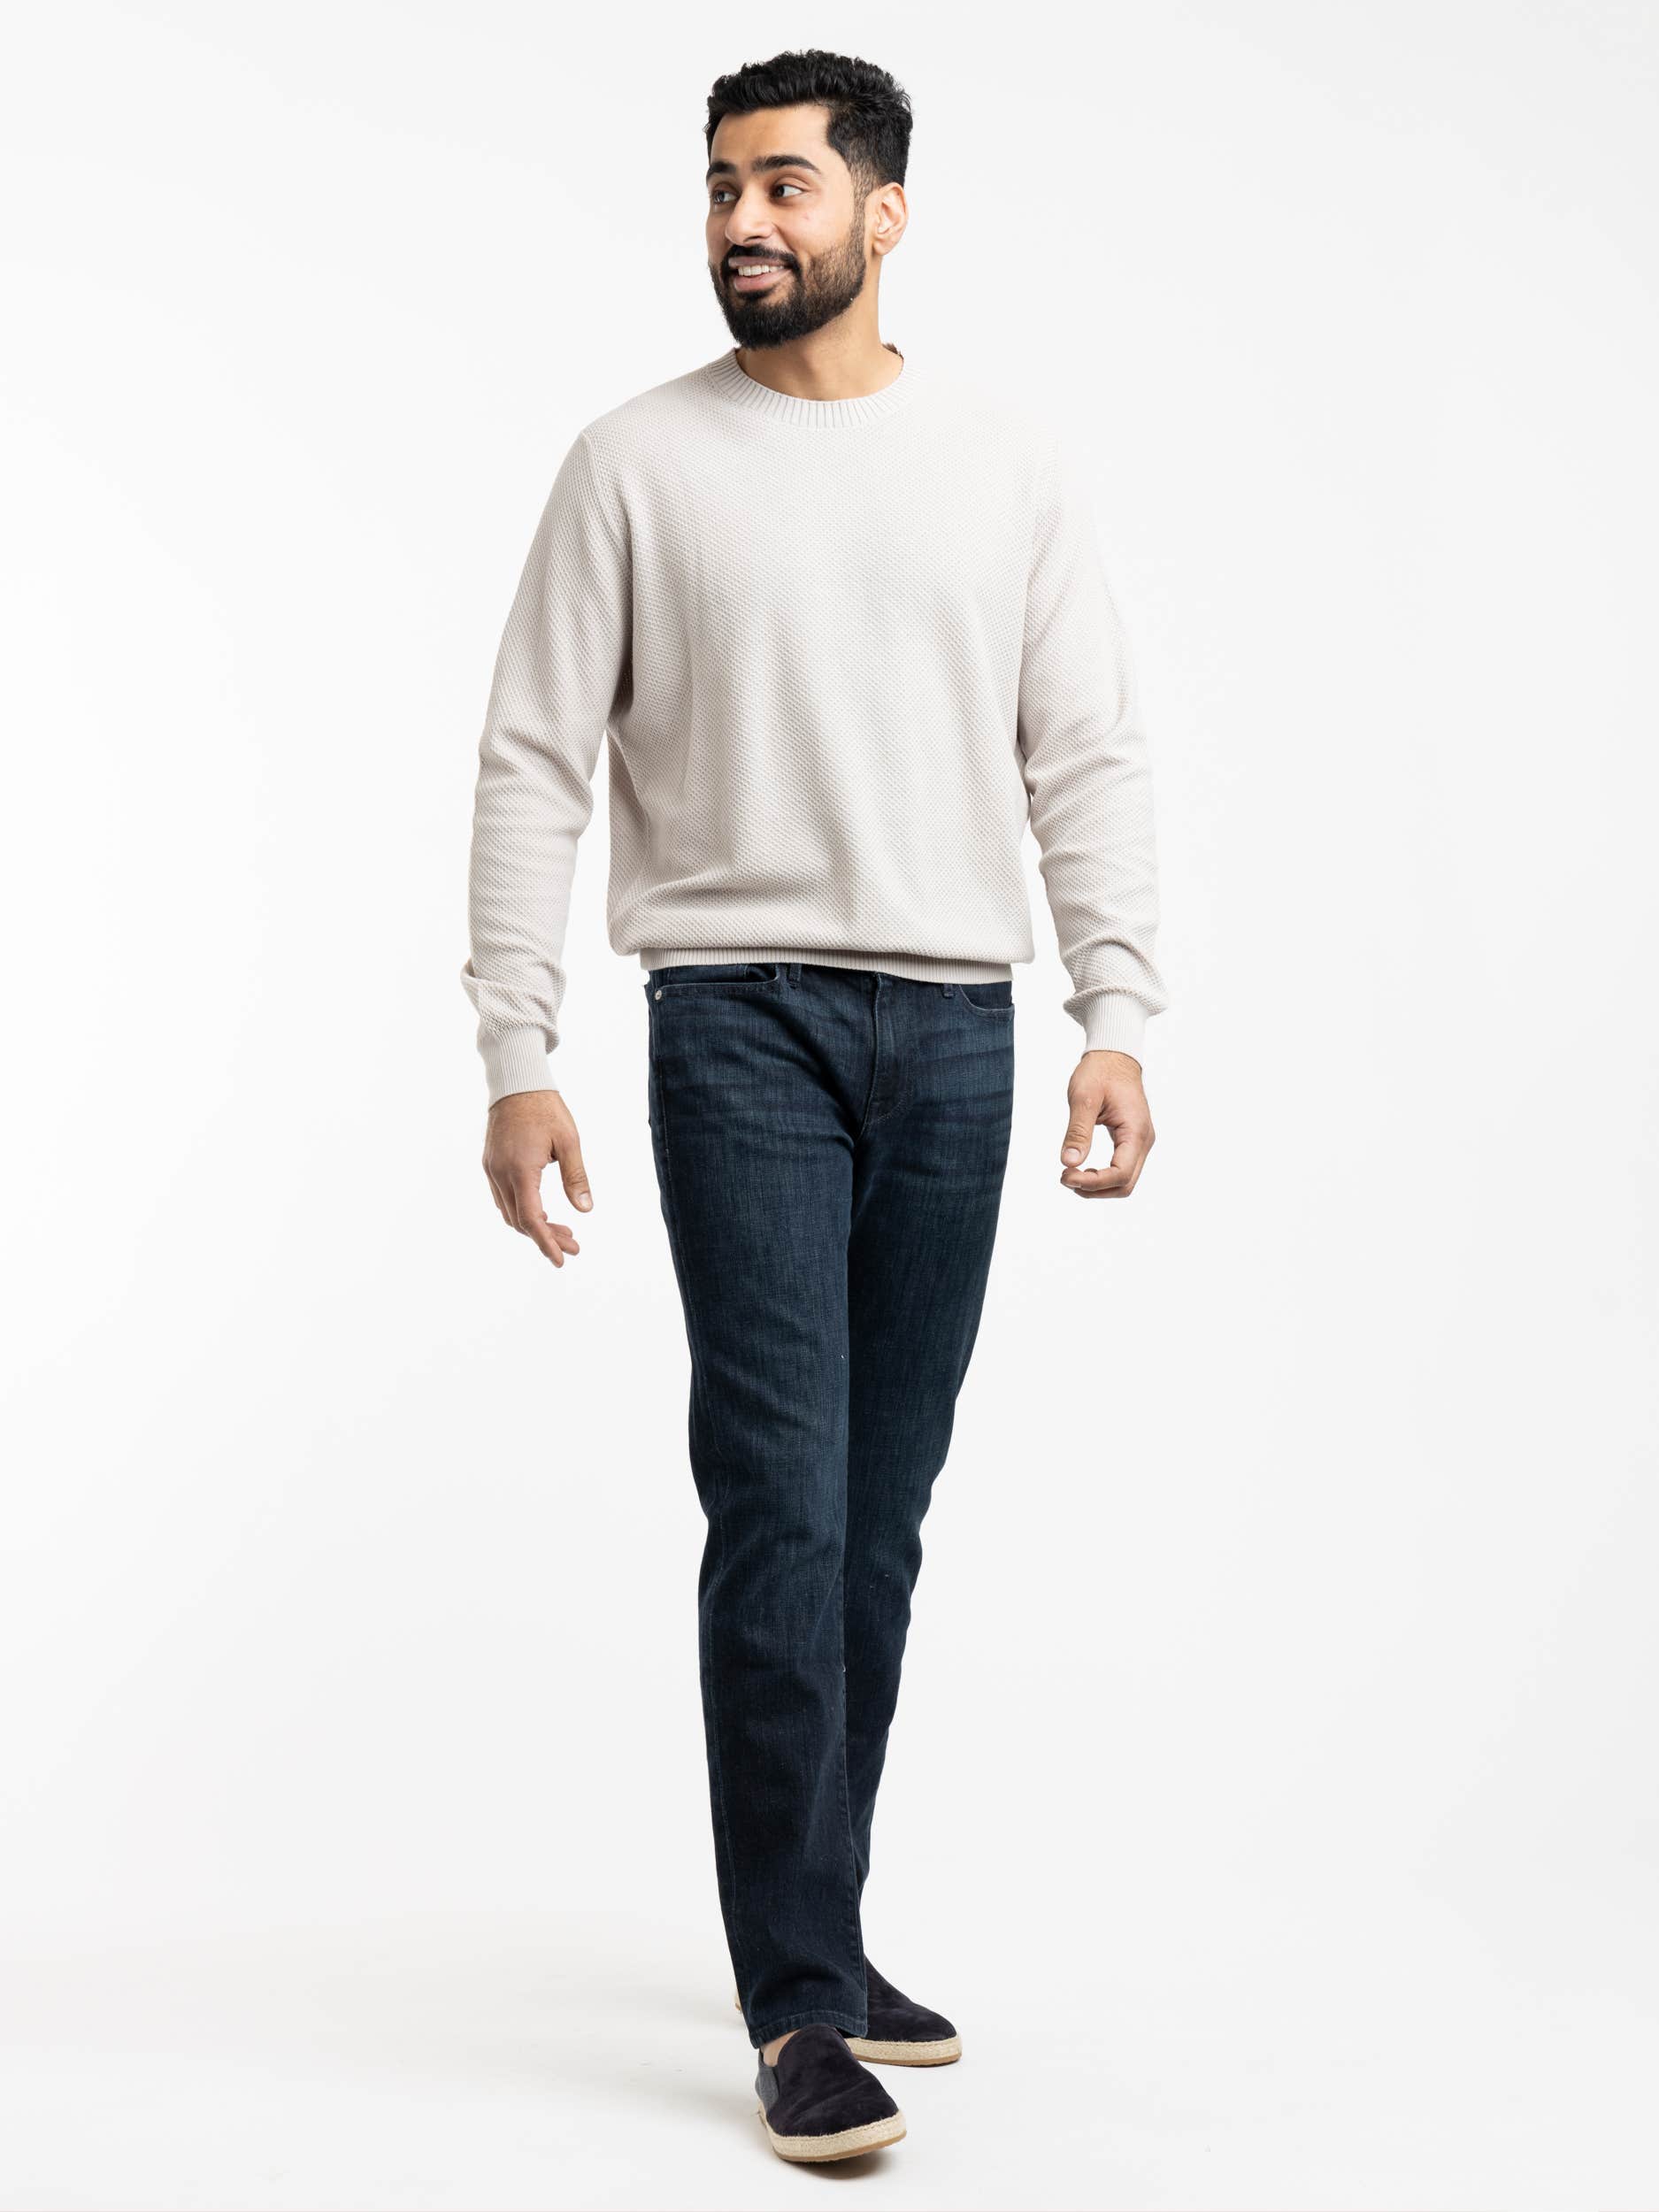 Slate Grey Long-Sleeve Crewneck Sweater